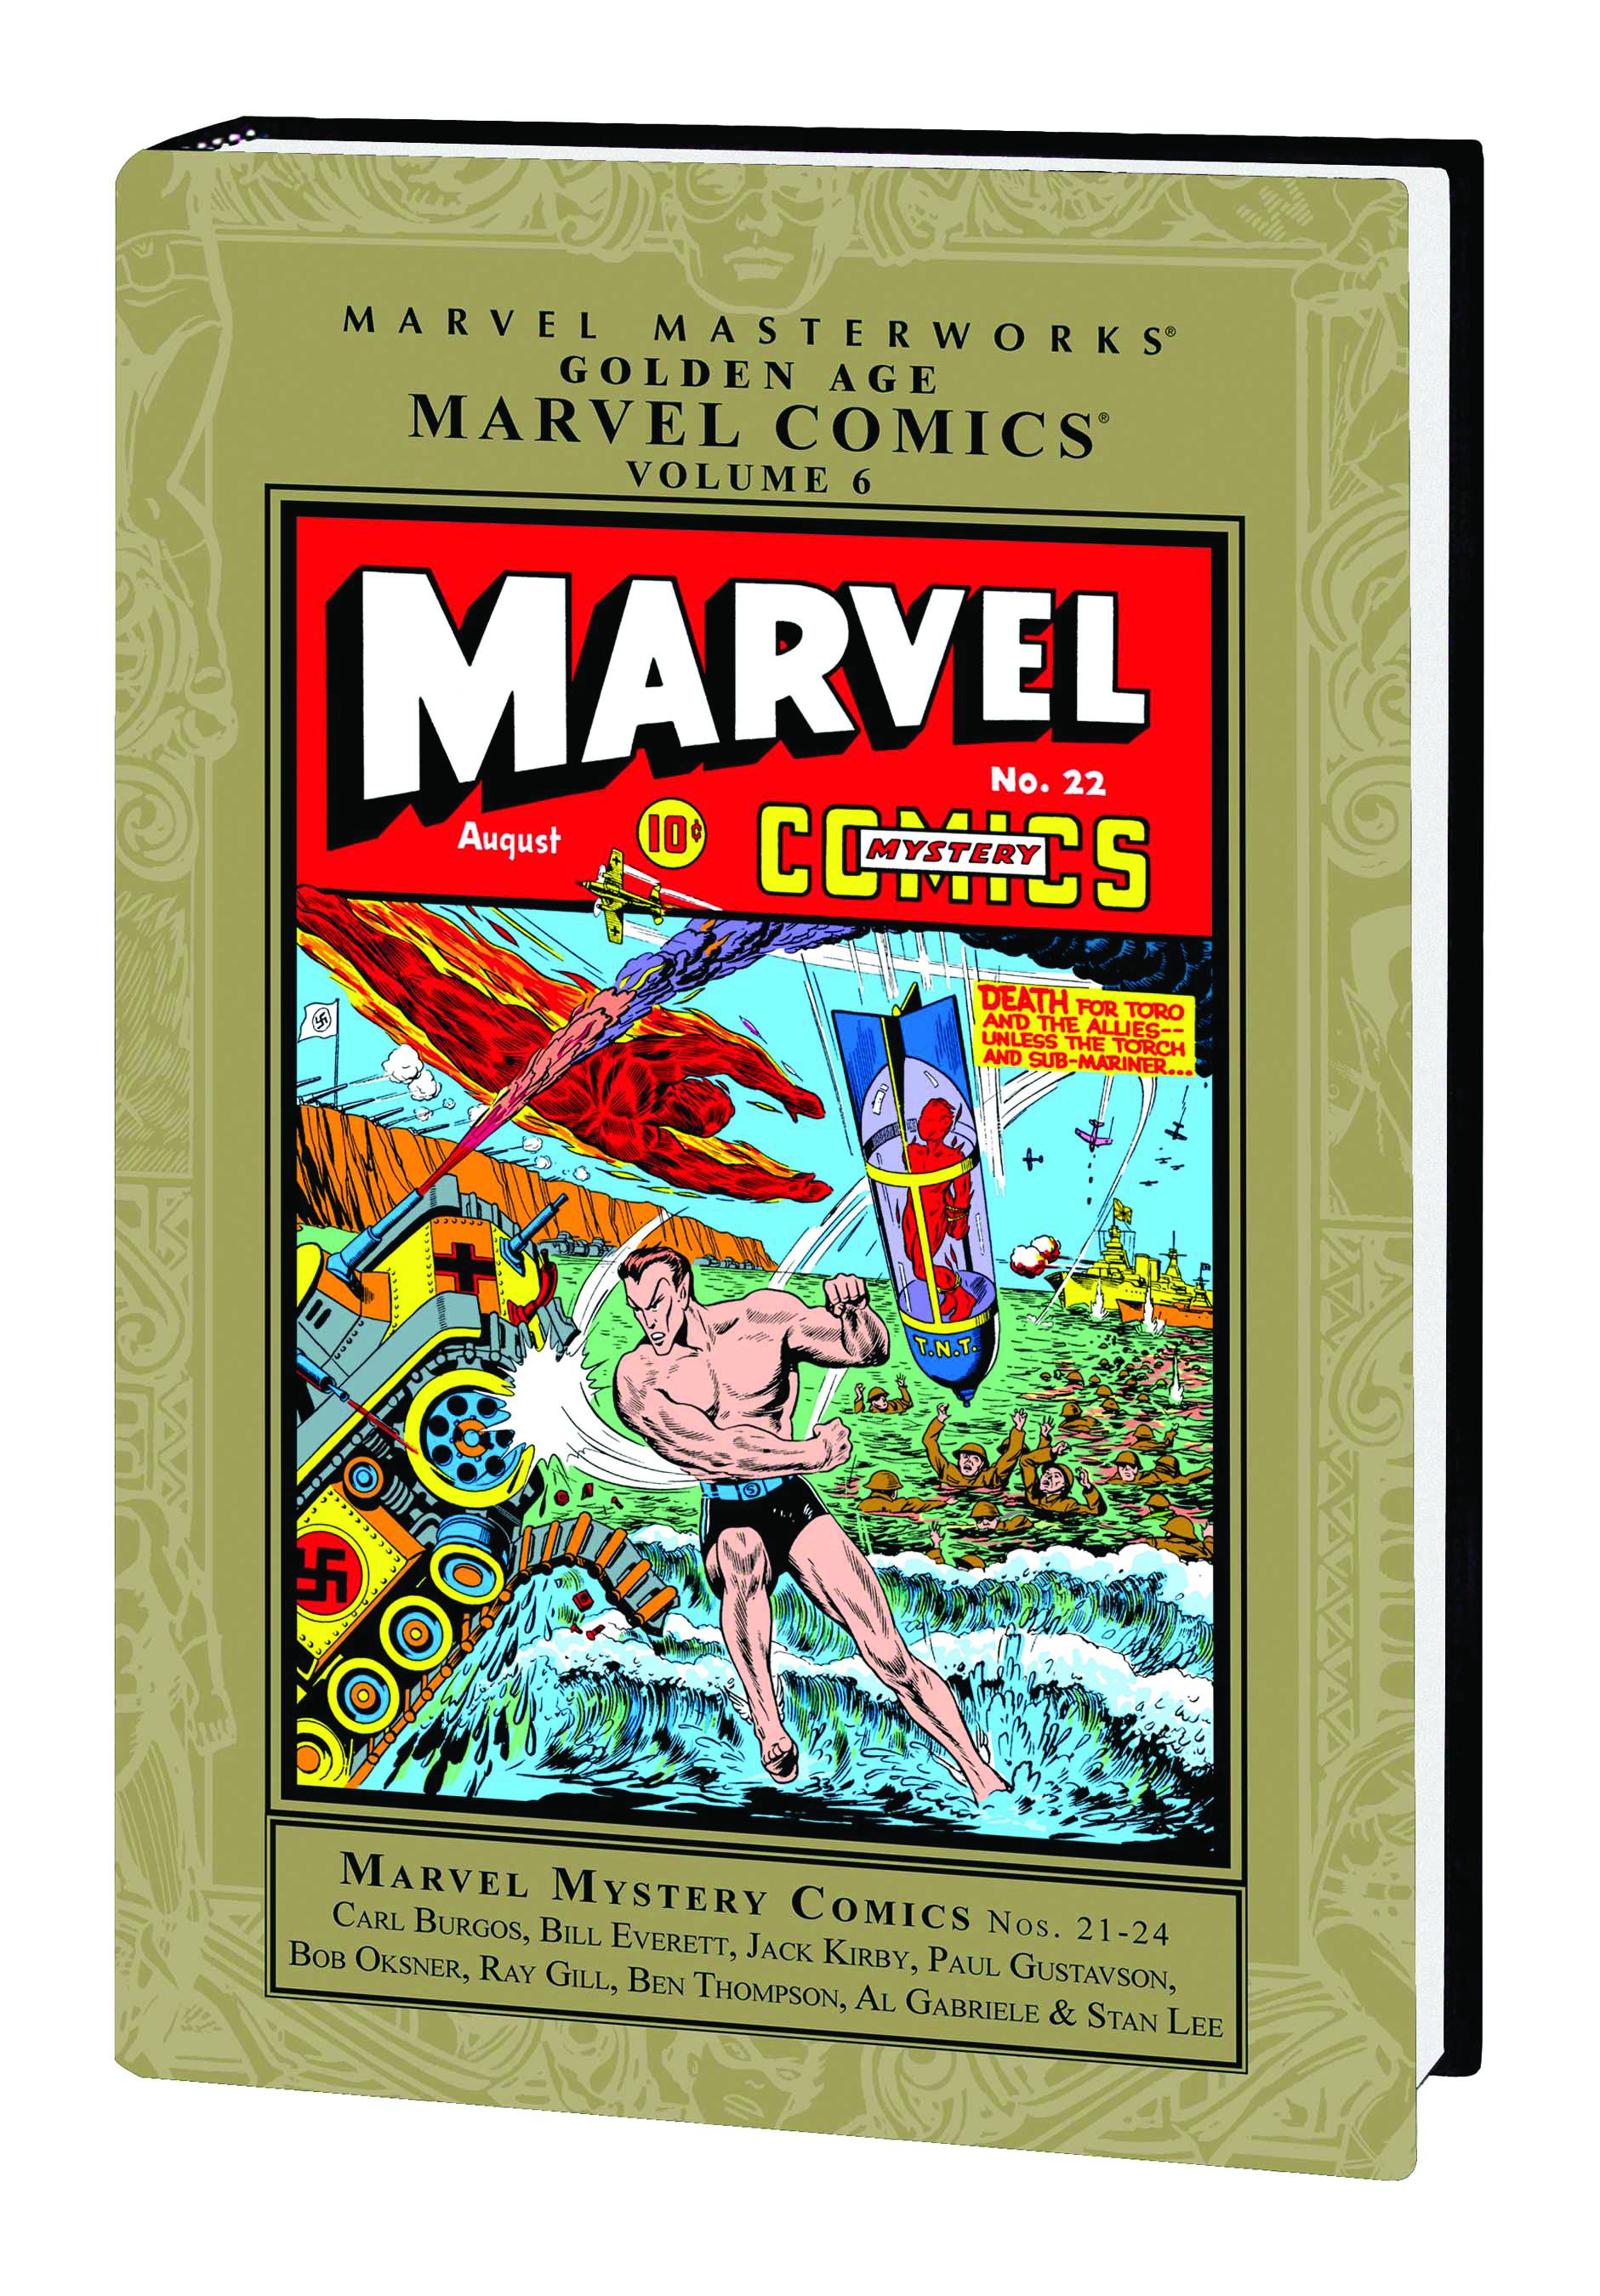 Marvel Masterworks Golden Age Marvel Comics Hardcover Volume 6